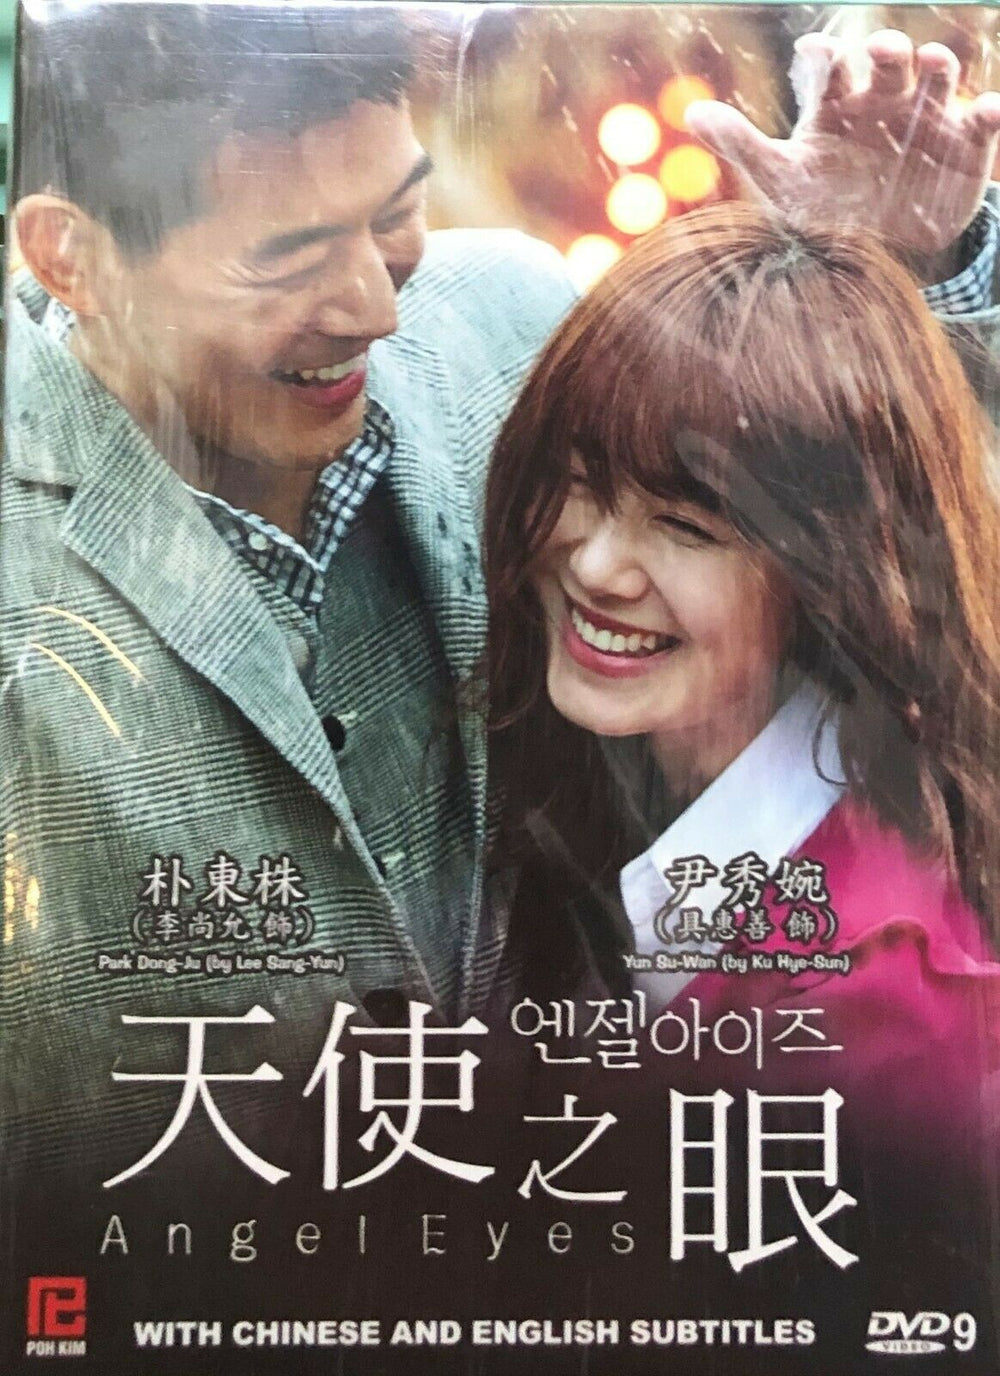 ANGEL EYES 2014  (KOREAN DRAMA) DVD 1-20 EPISODES WITH ENGLISH SUBTITLES  (ALL REGION)  天使之眼